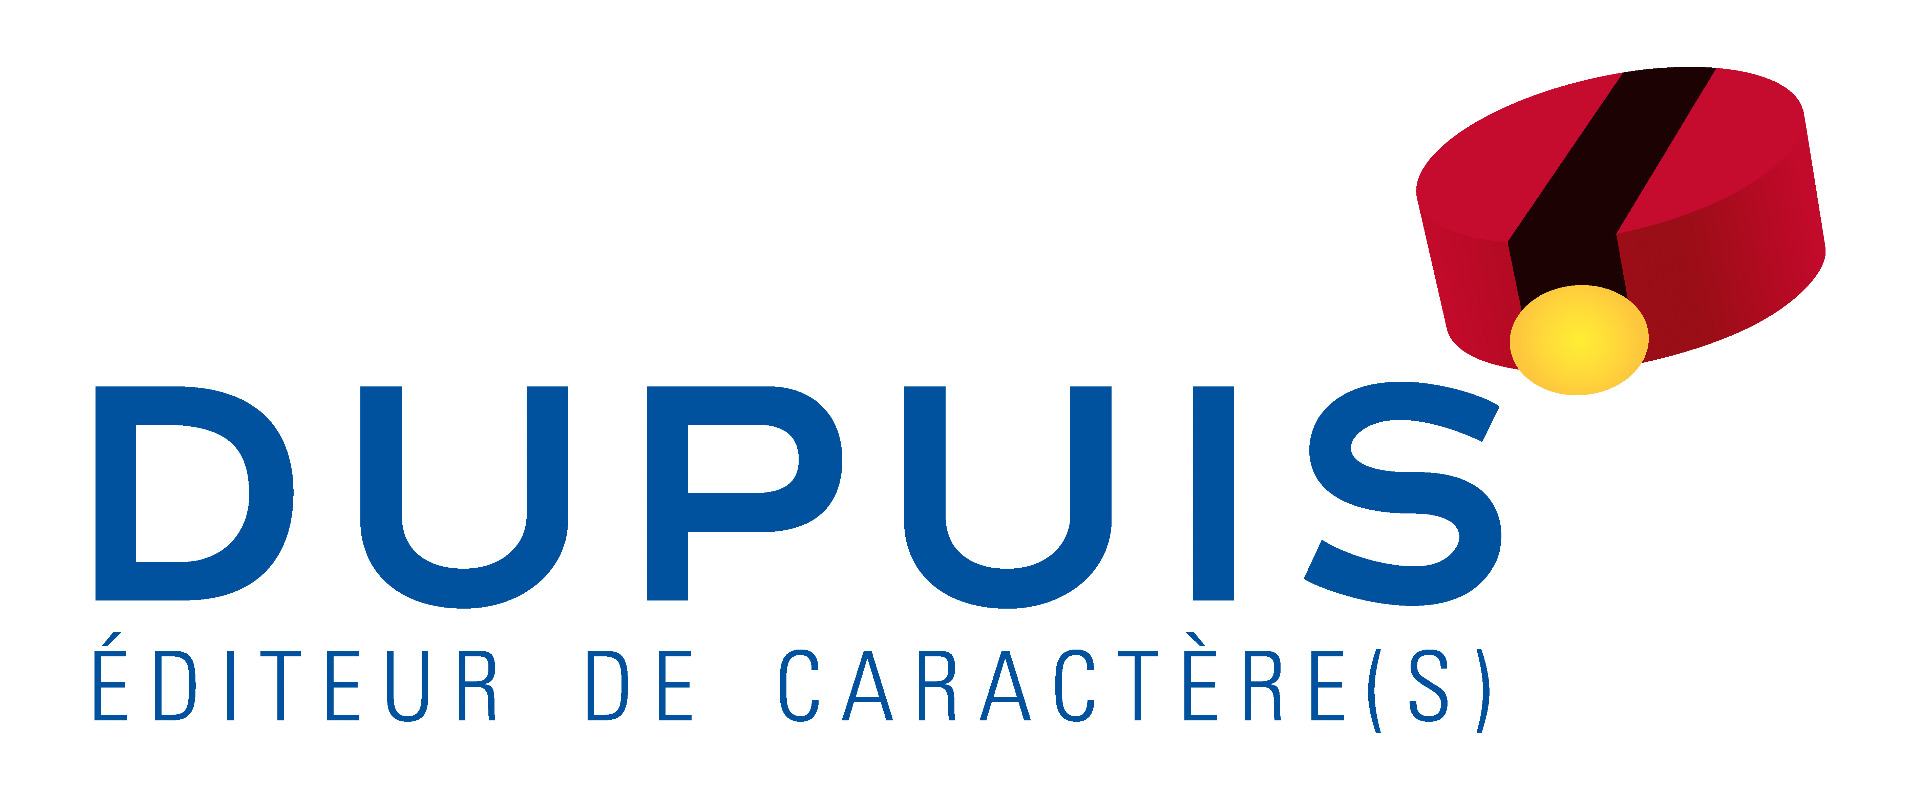 Dupuis logo.jpg